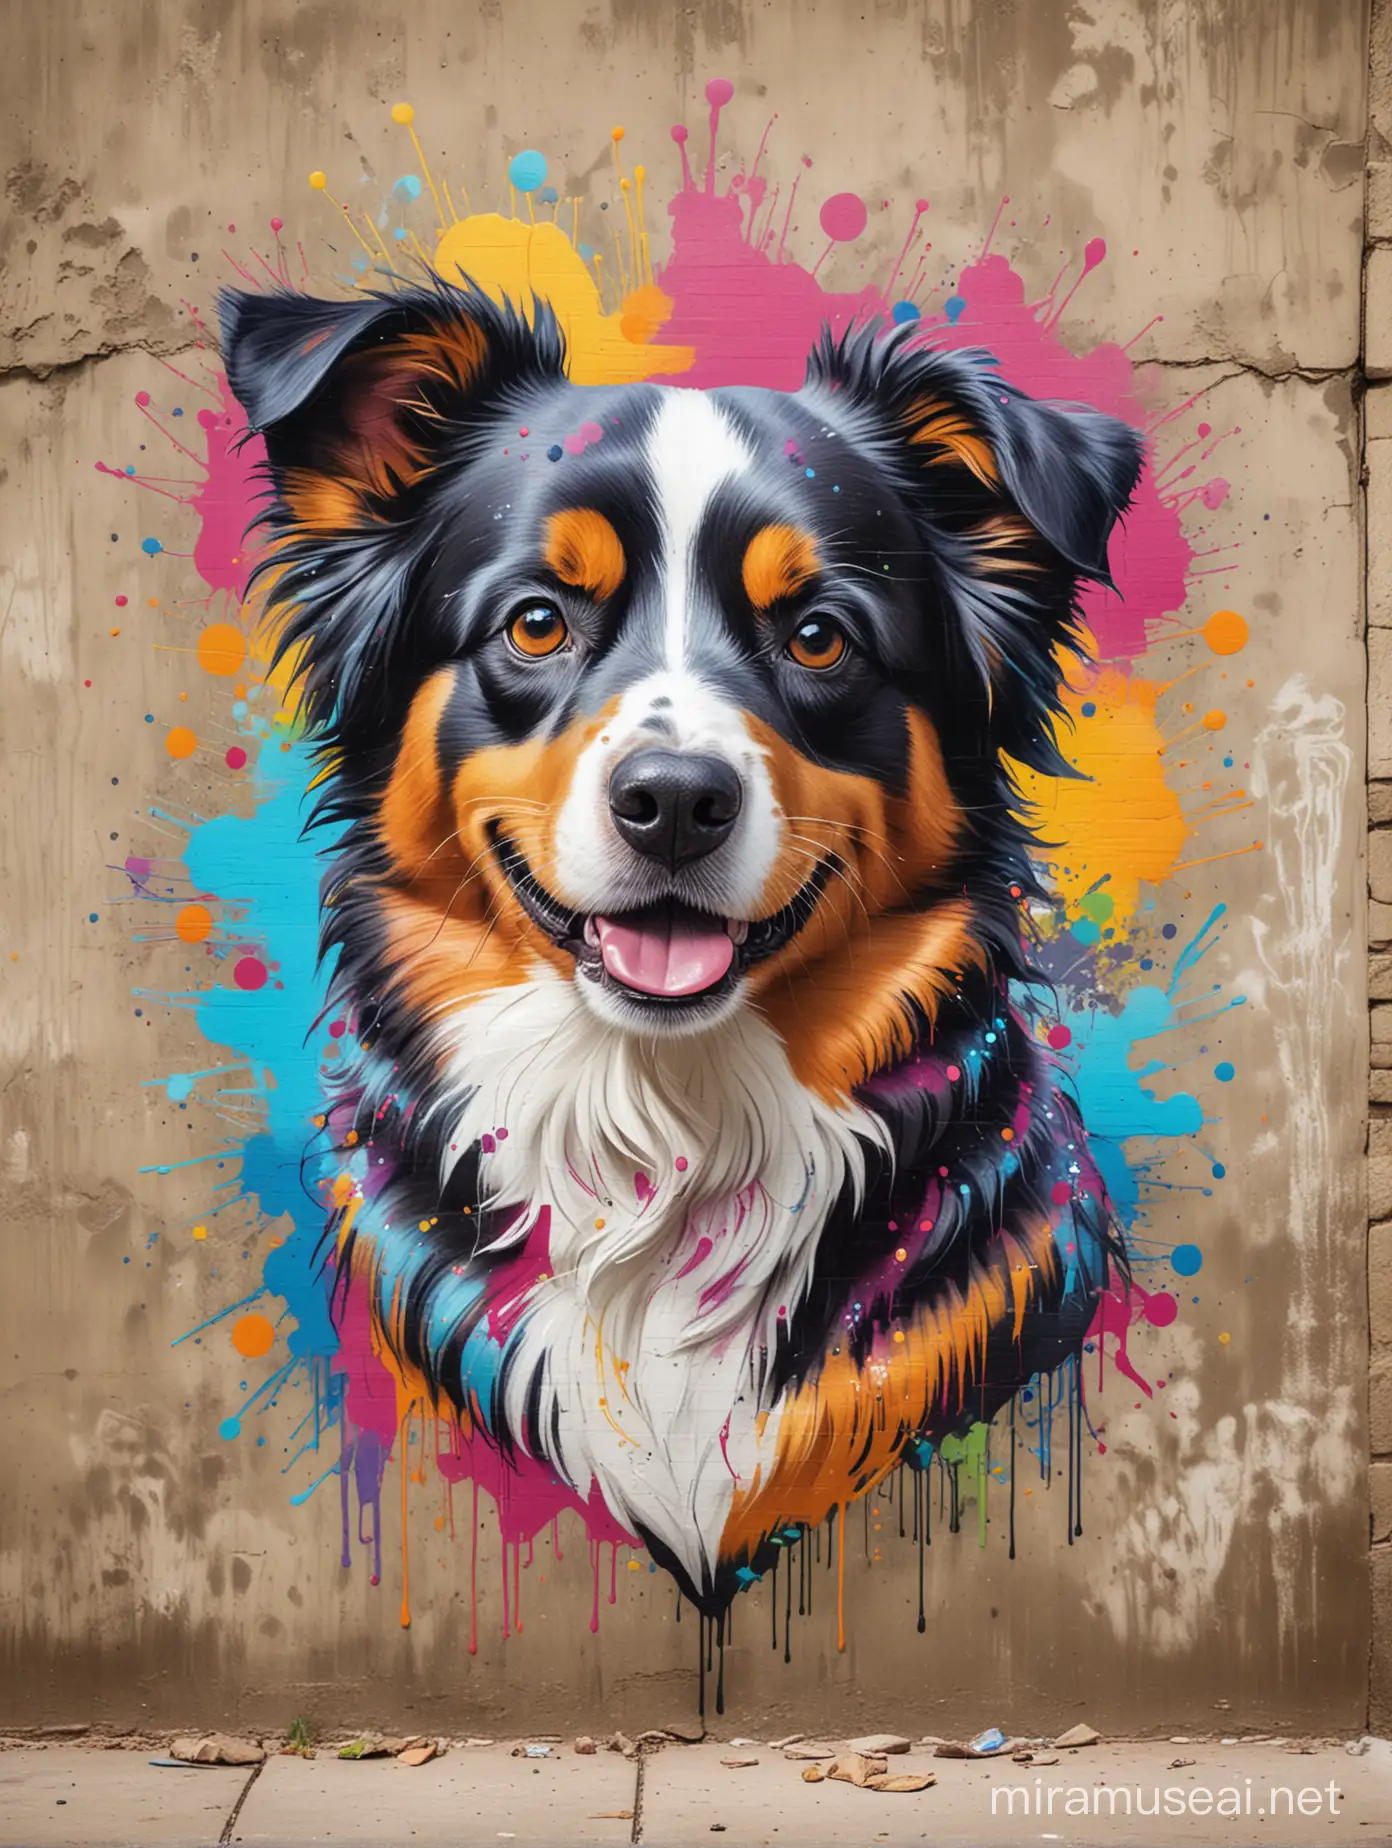 Colorful Graffiti Art Tiny Happy Face Australian Shepherd Dog on Rustic Wall